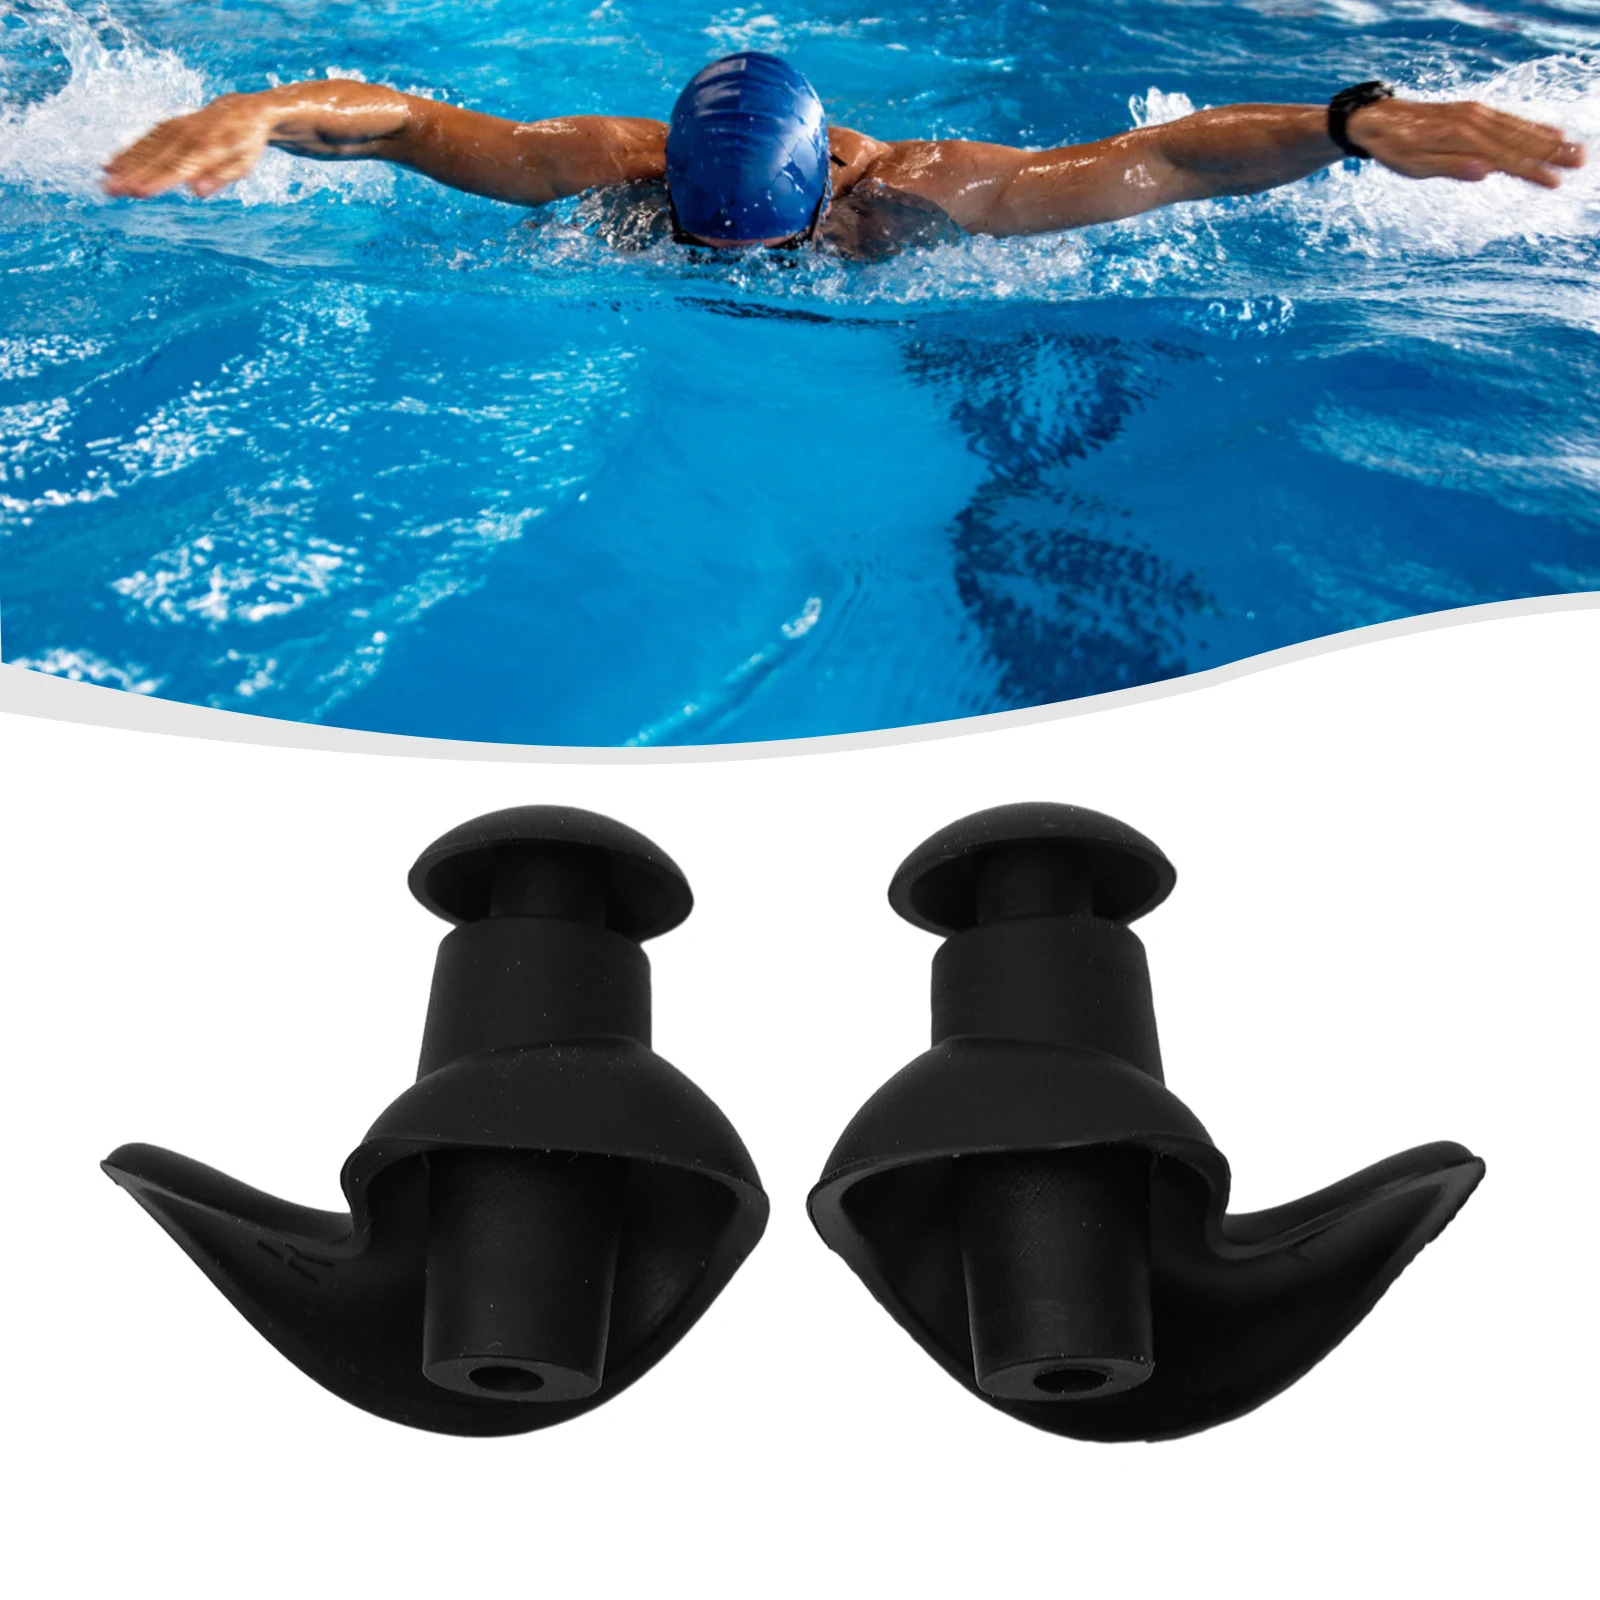 

Soft Earplugs Silicone Waterproof Earplug Dust-Proof Ear Environmental Sport Plugs Diving Water Sports Swimming Pool Accessories